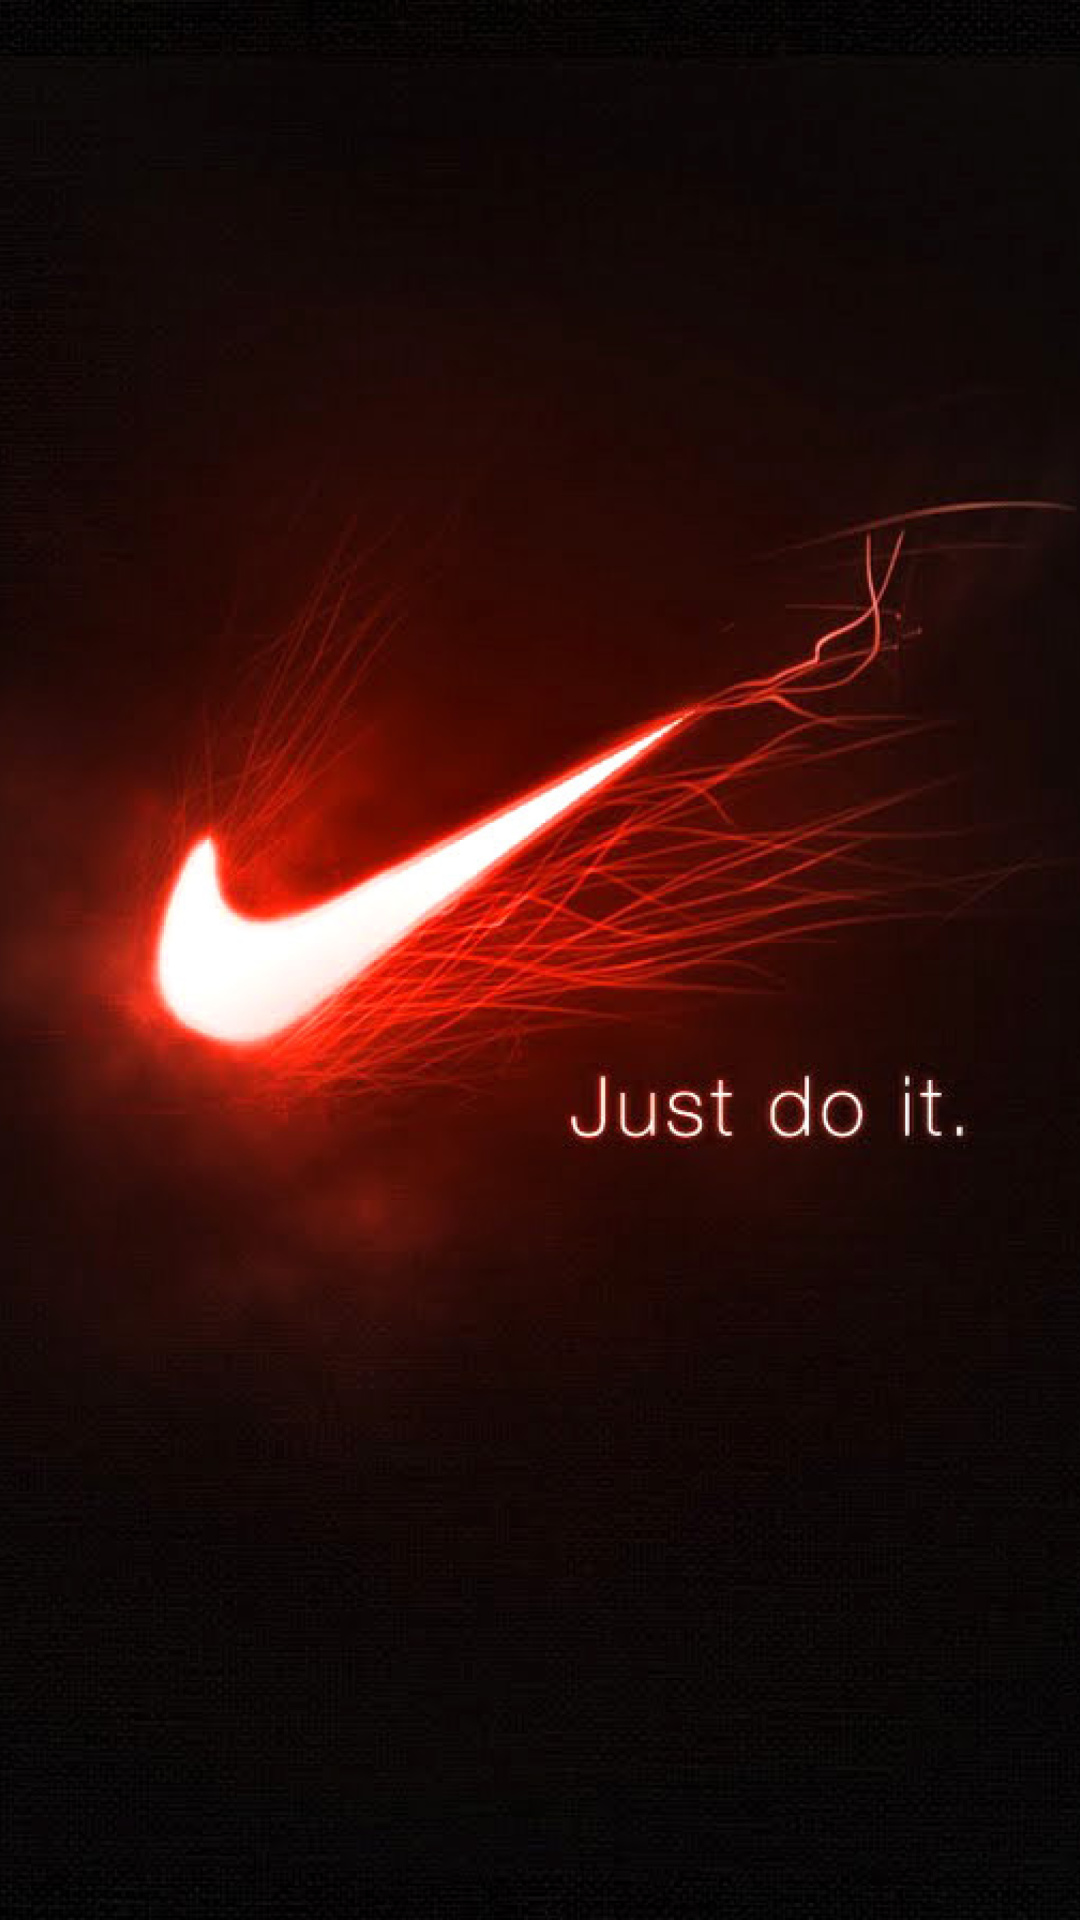 Обои Nike Advertising Slogan Just Do It 1080x1920